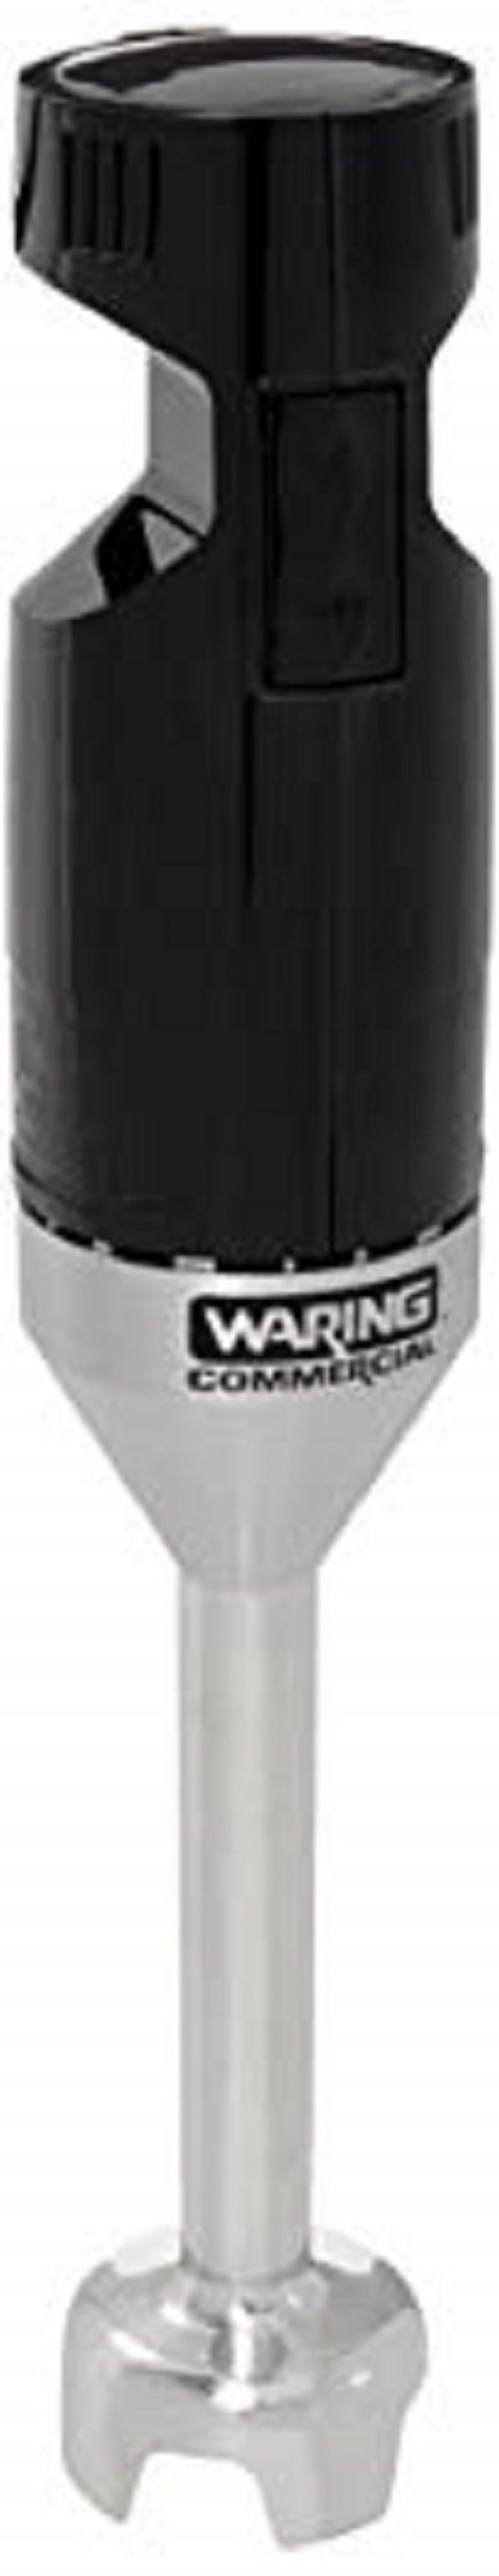 Waring Commercial 7 Light-Duty Quik Stik Immersion Blender